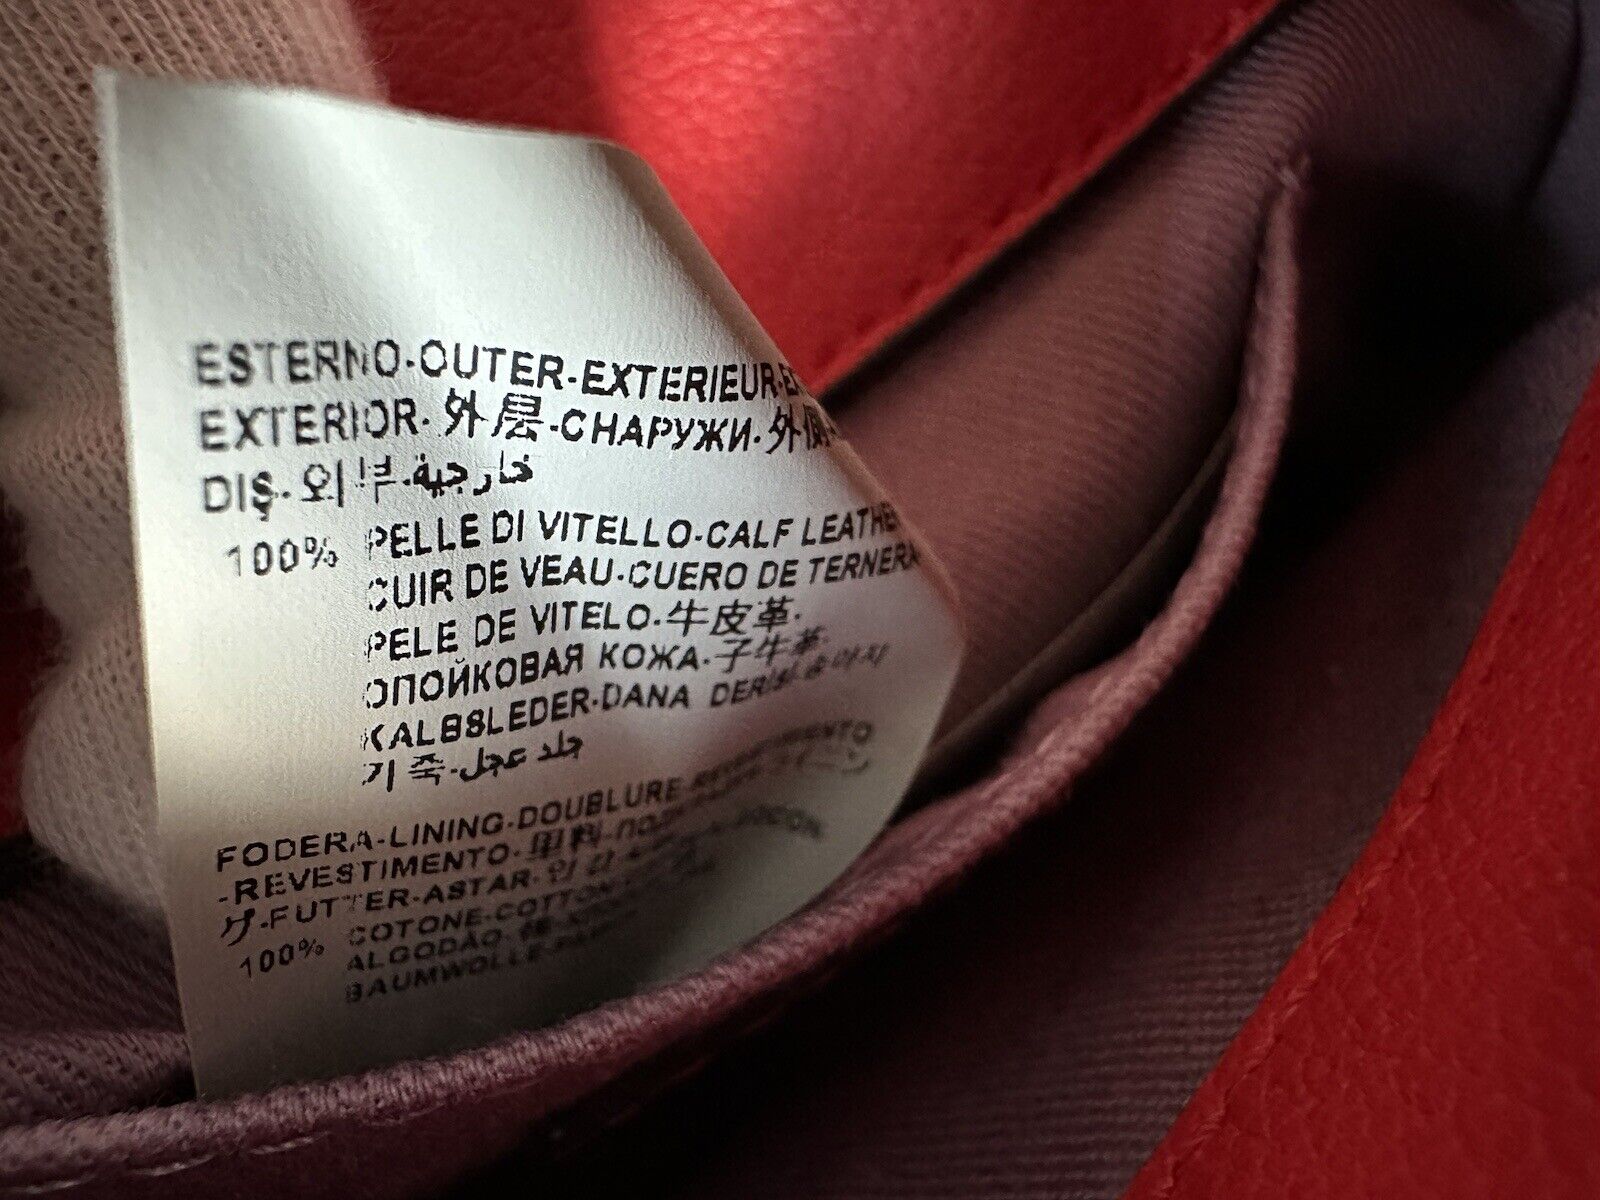 Neu mit Etikett: 1.450 $ Versace Mini-Hobo-Tasche mit Medusa-Kopf aus Kalbsleder in Rot 1000802 IT 